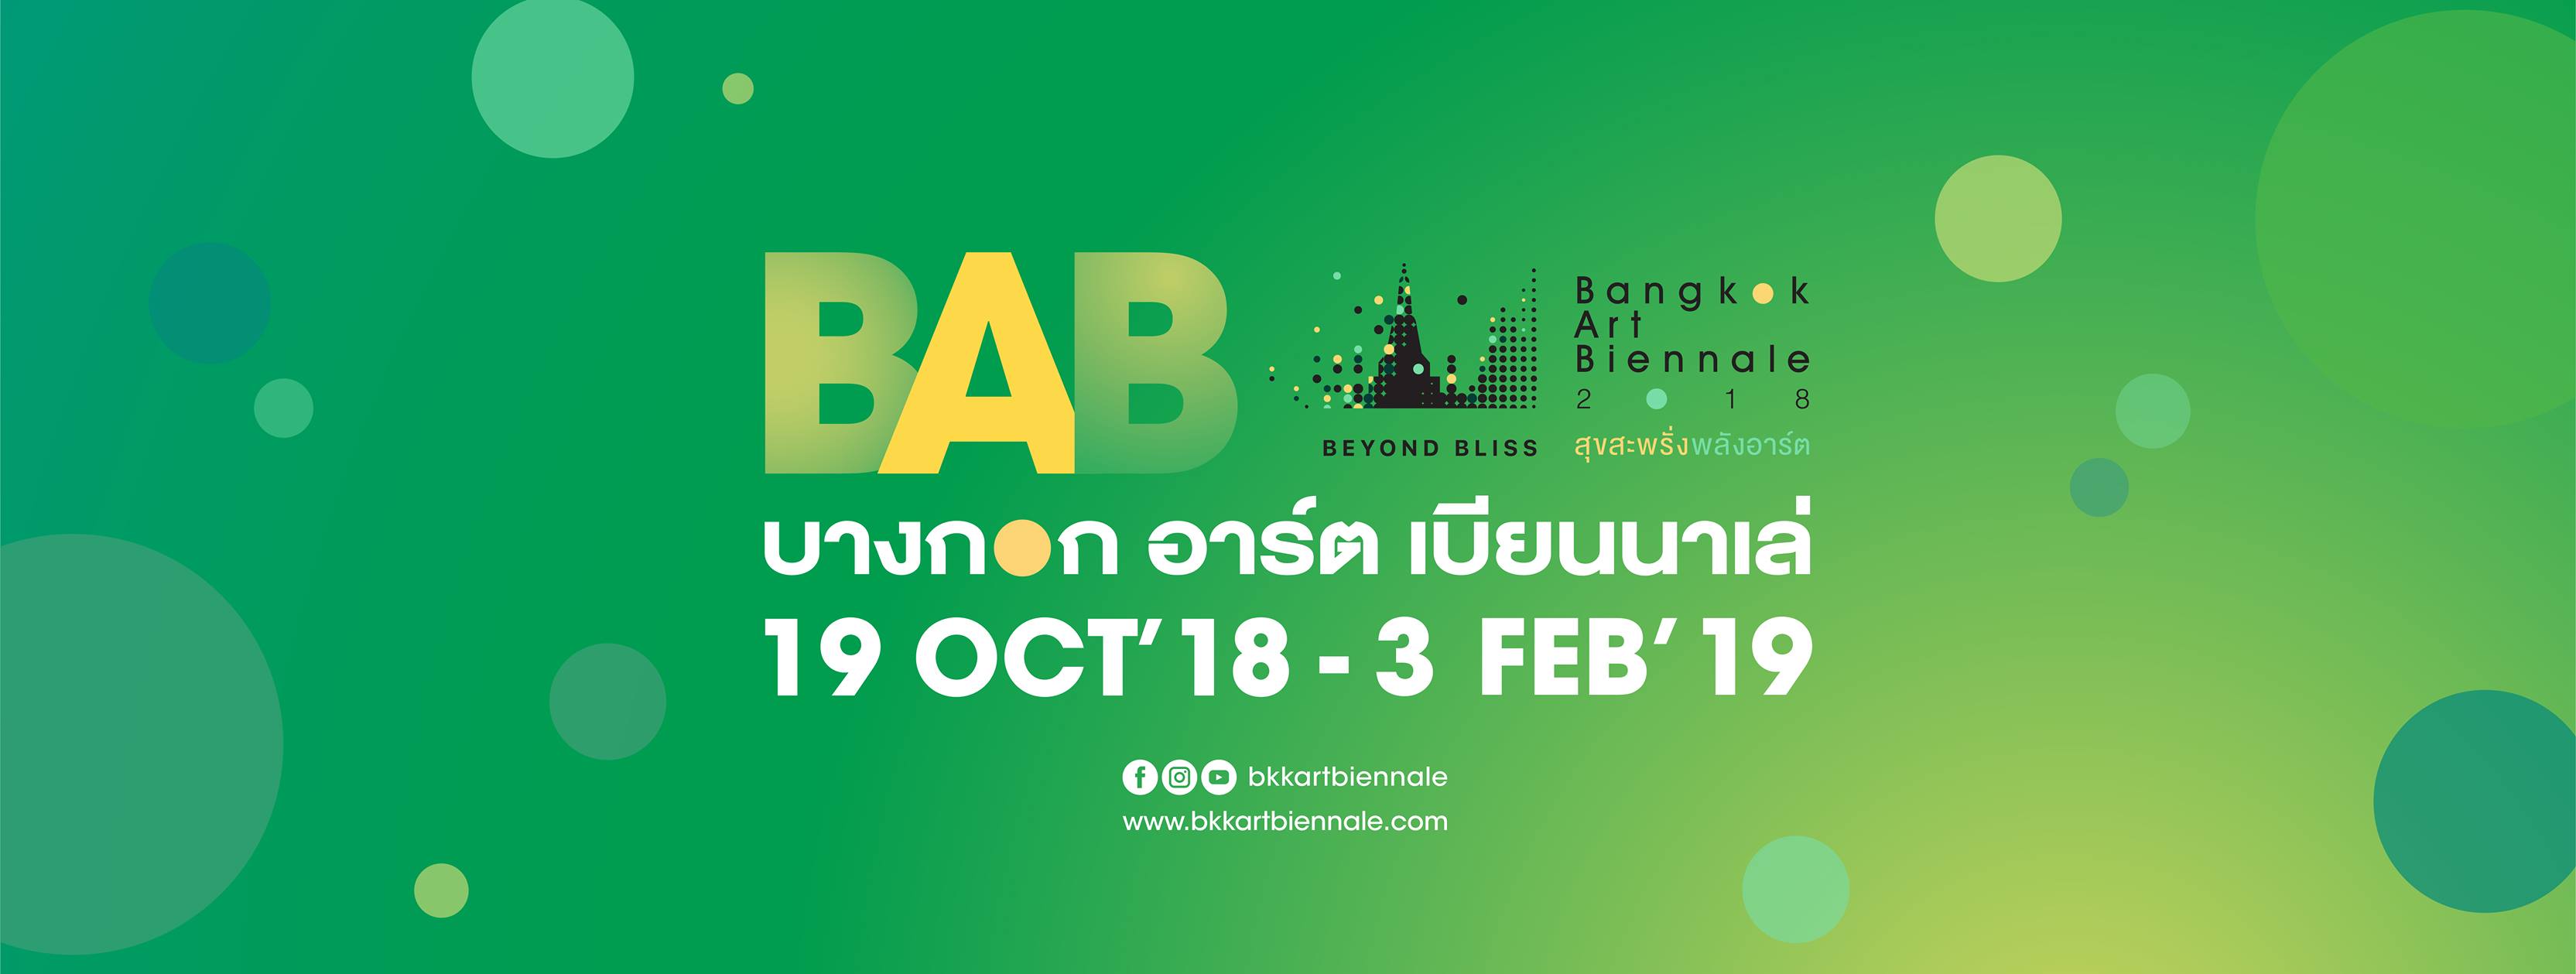 Bangkok Art Biennale 2018